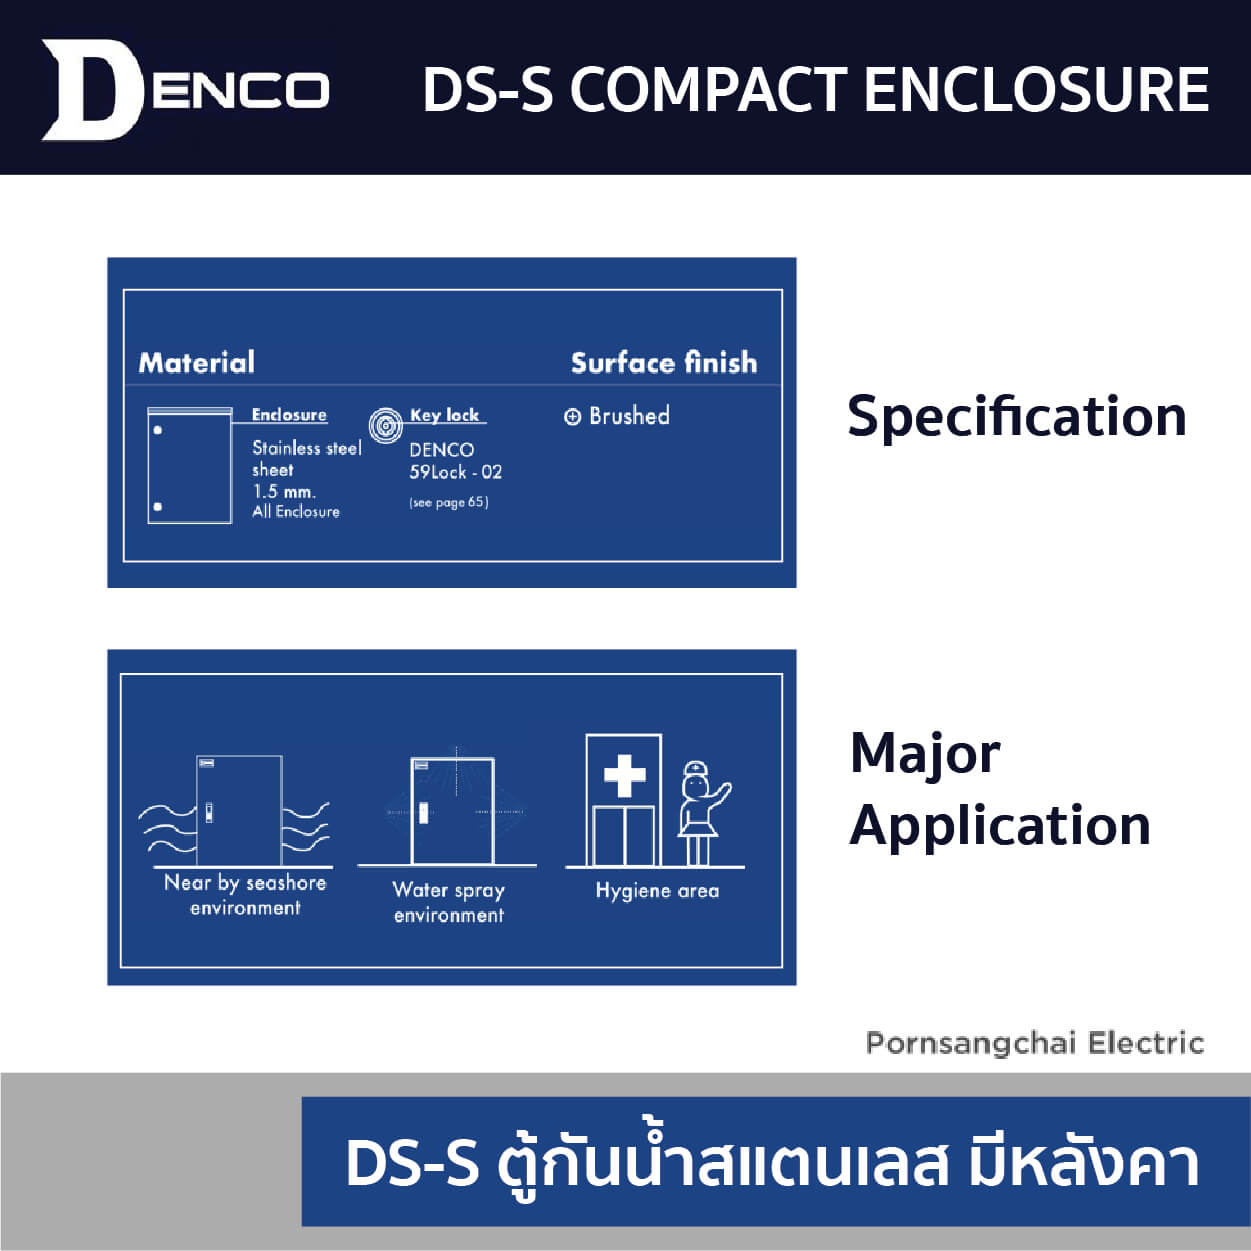 DS-S Compact Enclosure